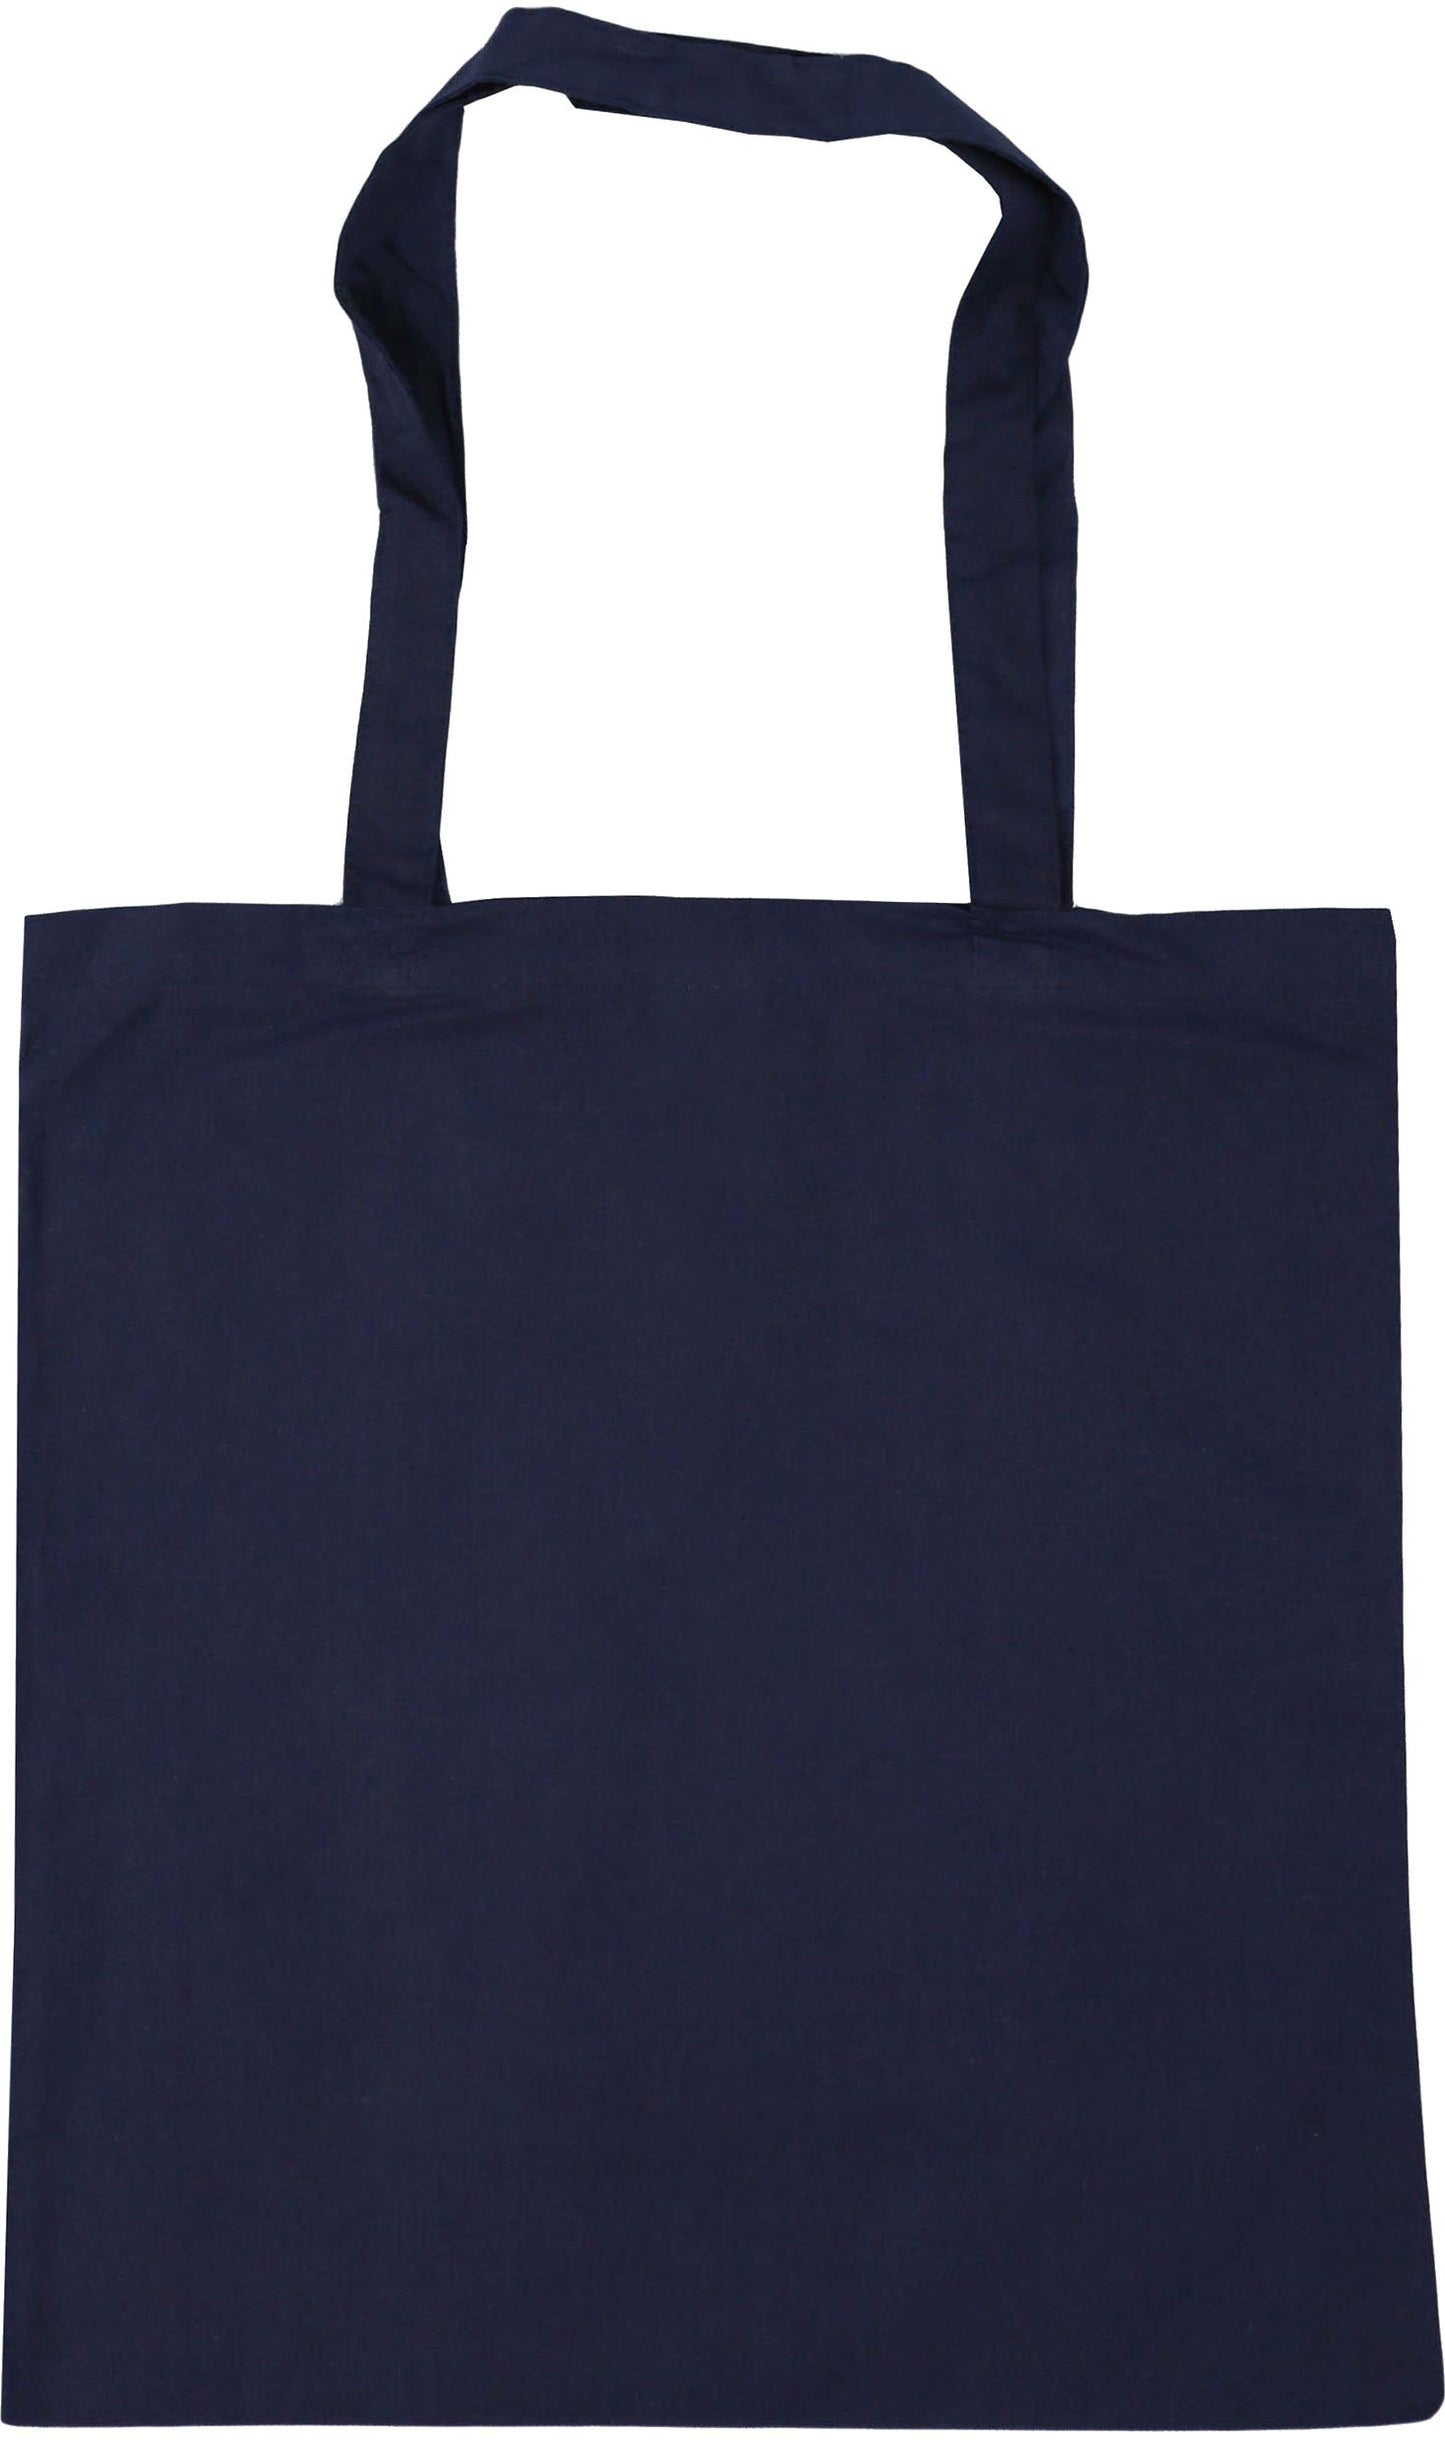 Personalised Tote Bag